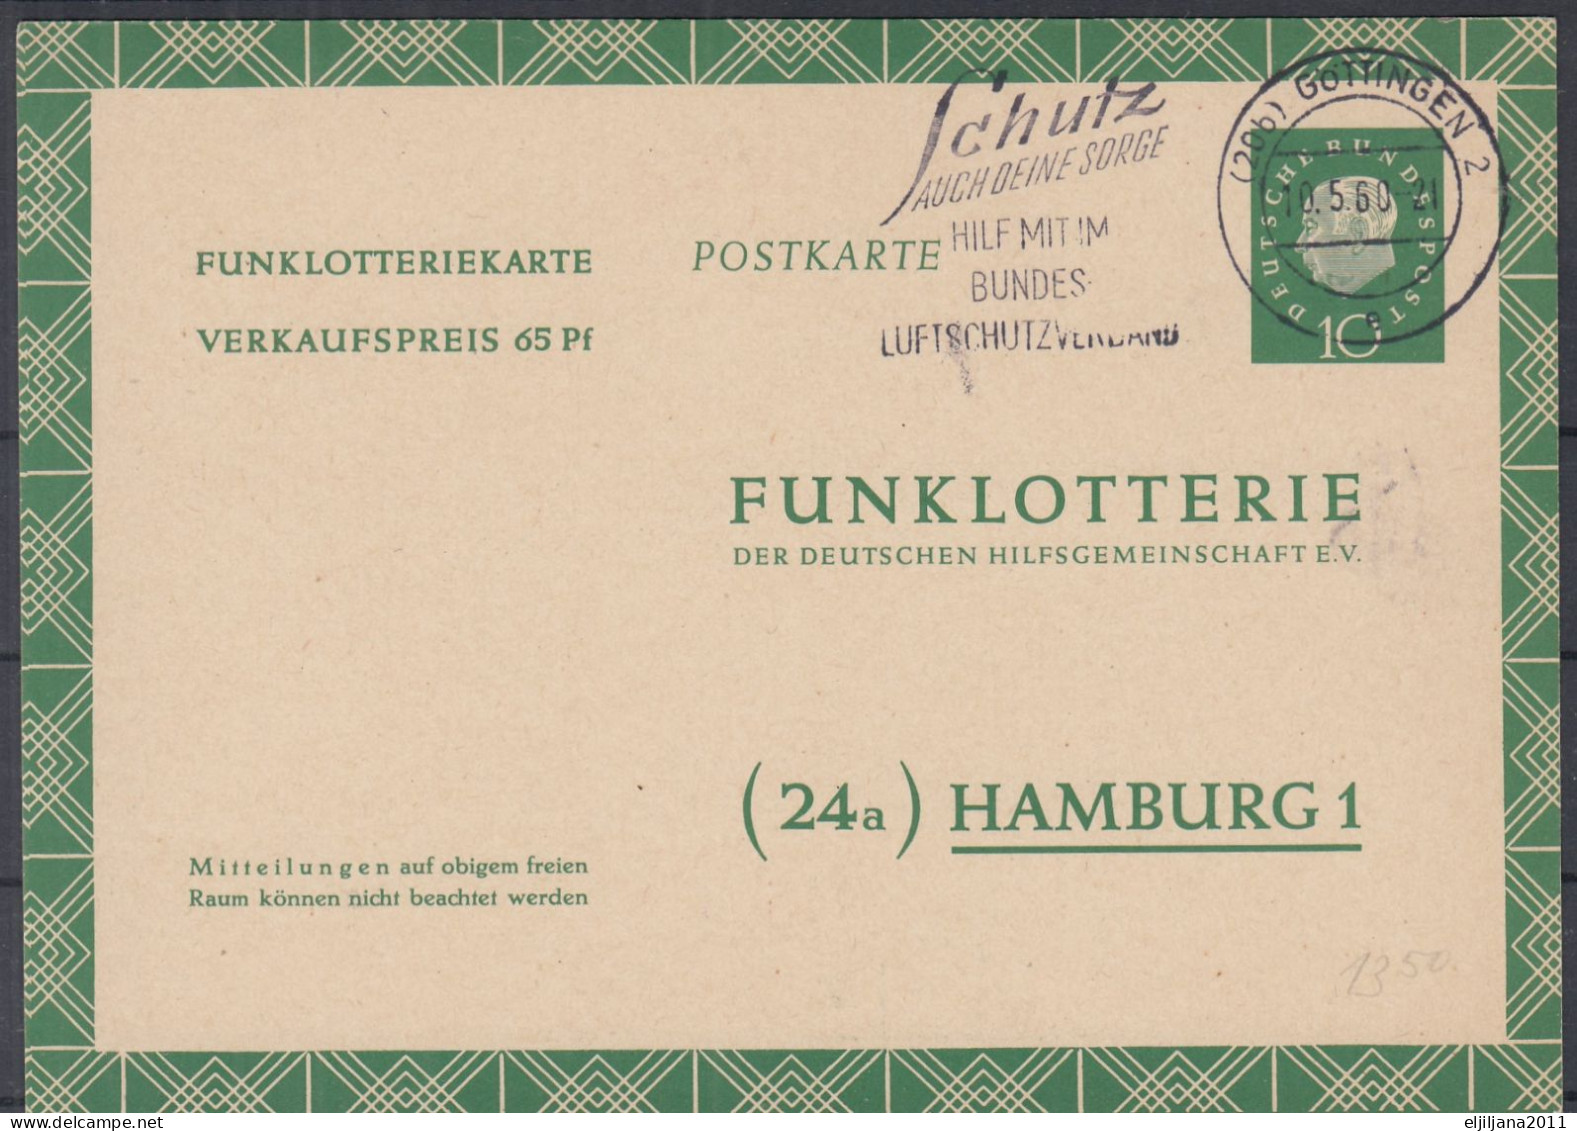 ⁕ Germany 1960 Deutsche BundesPost ⁕ FUNKLOTTERIE (24a) Hamburg 1 ⁕ Göttingen Postmark ⁕ Stationery Postcard - Postcards - Used